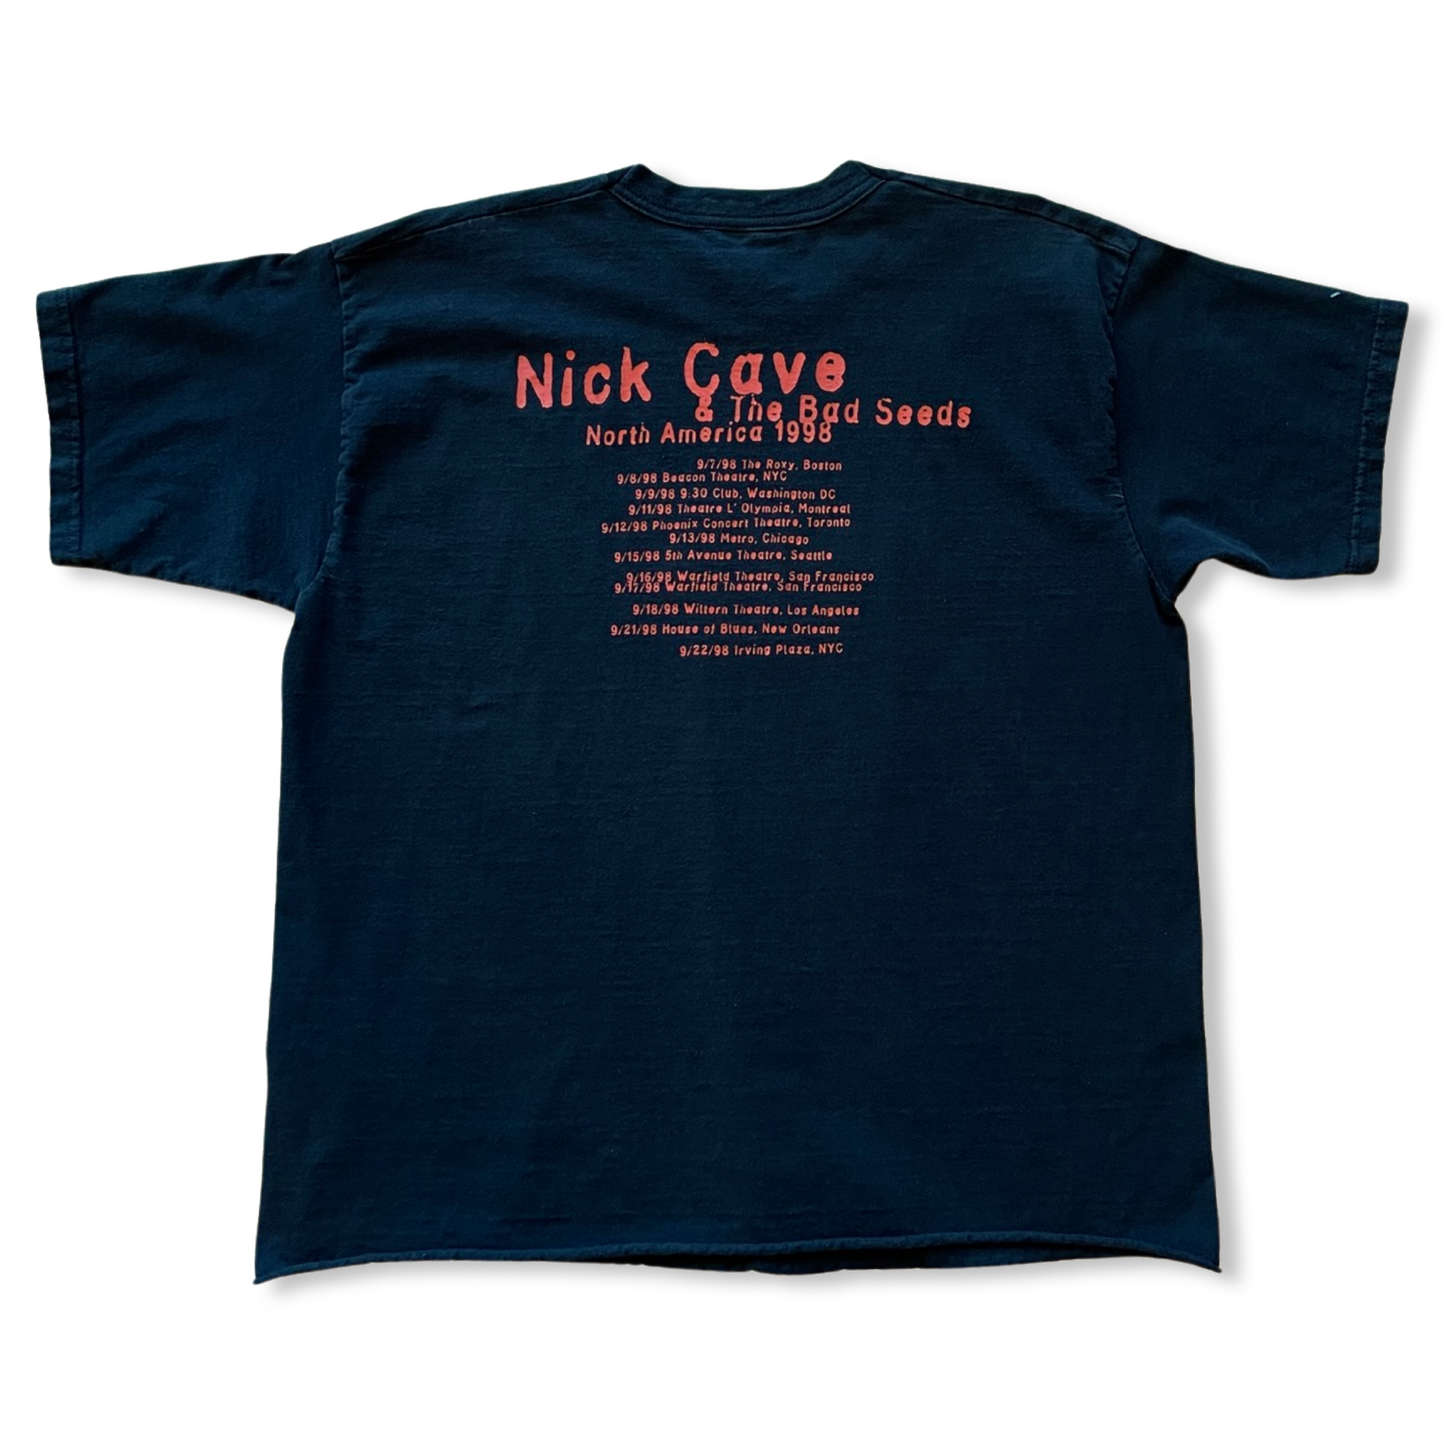 Nick Cave & The Bad Seeds Tee